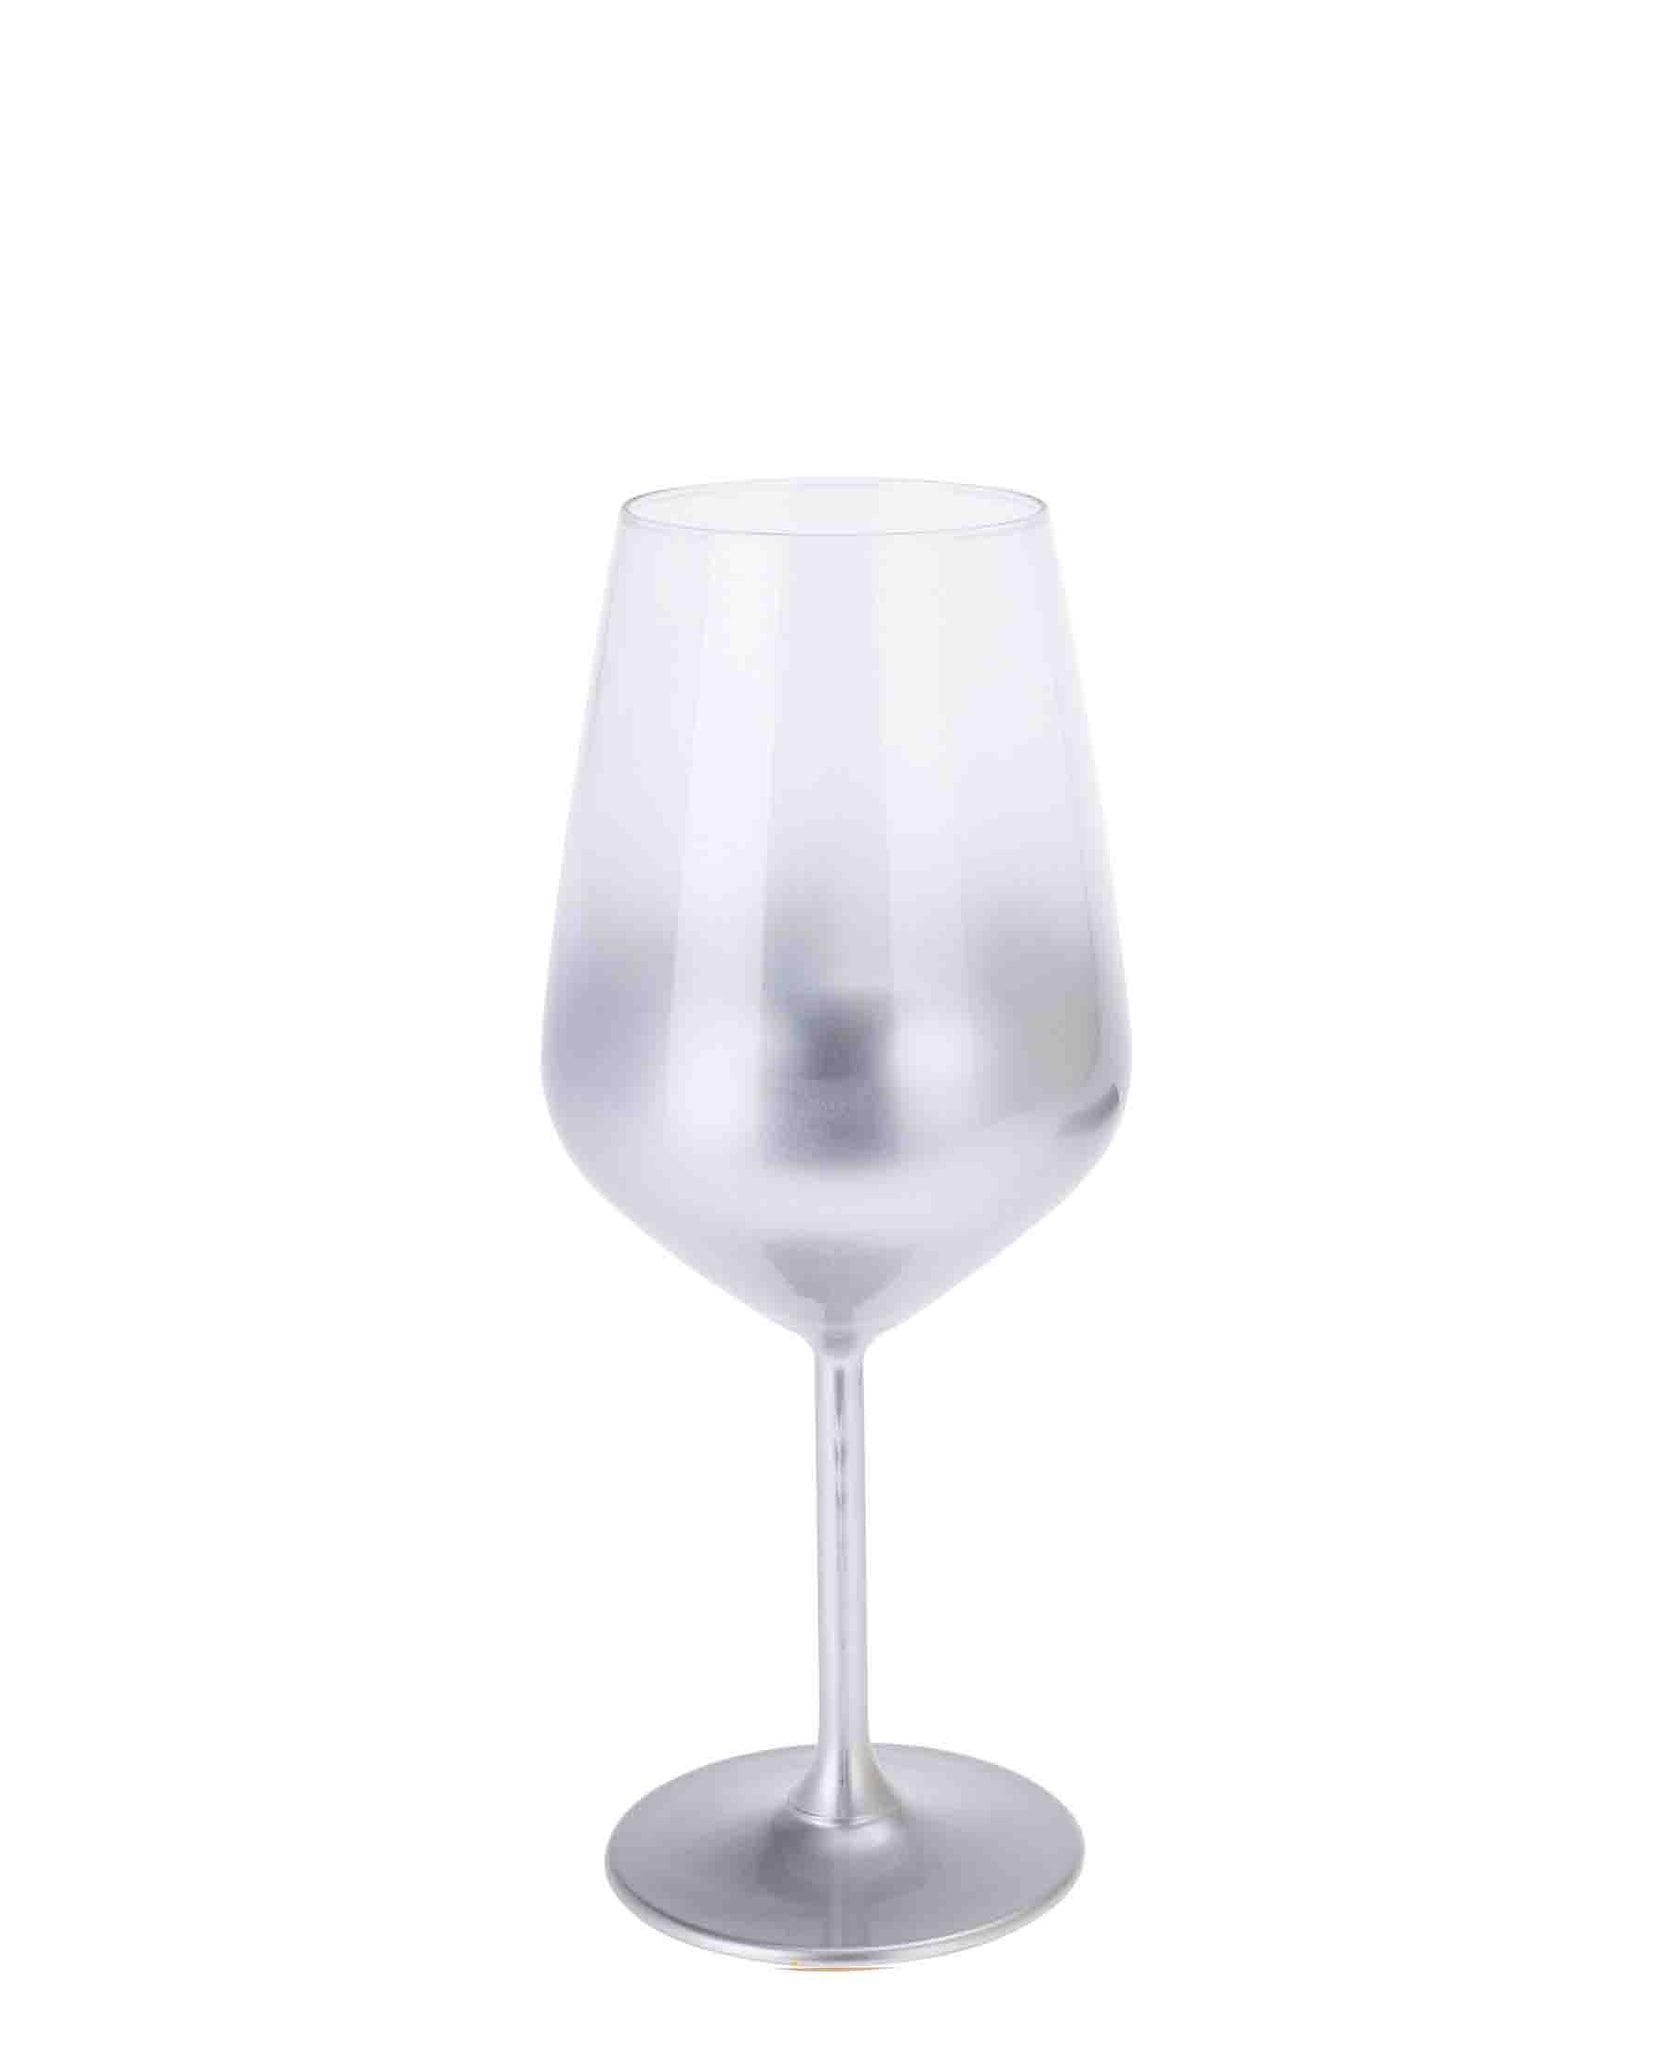 Kitchen Life 490ml Wine Glass - Silver